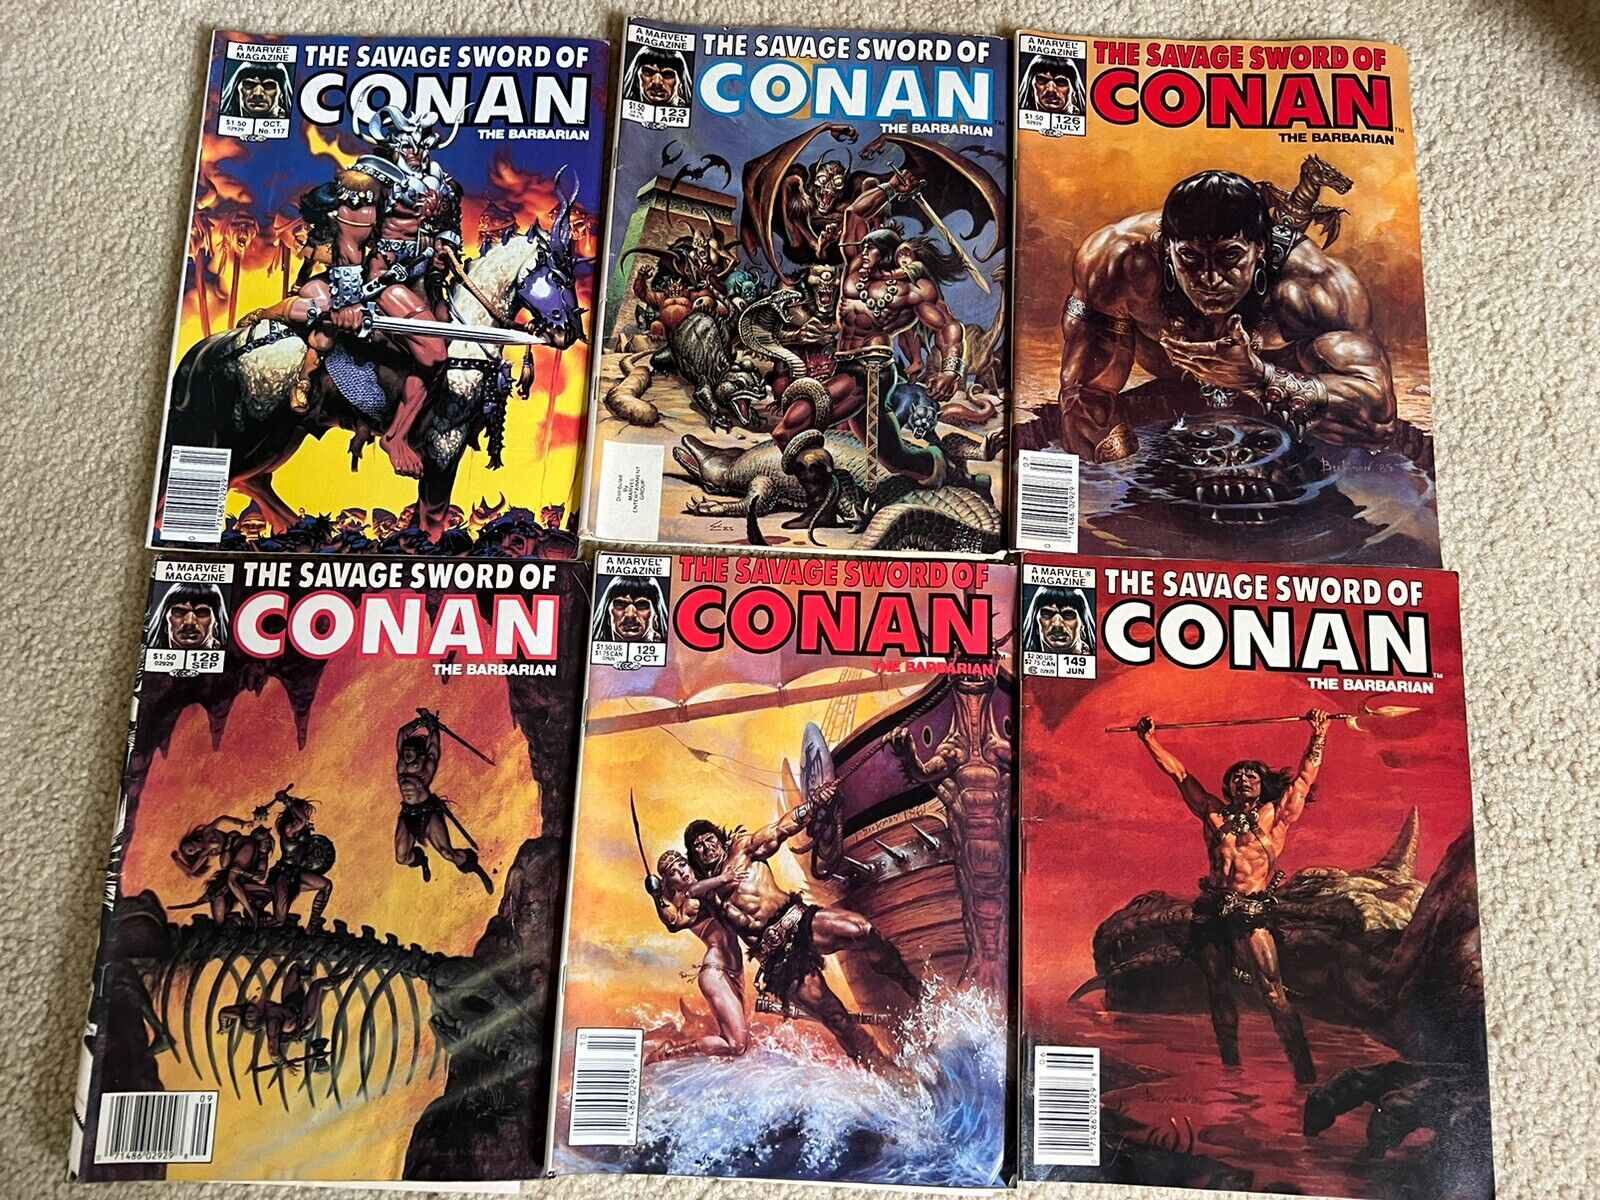 Savage Sword of Conan #117, #123, #126, #128, #129, #149 (Dark Horse Comics)